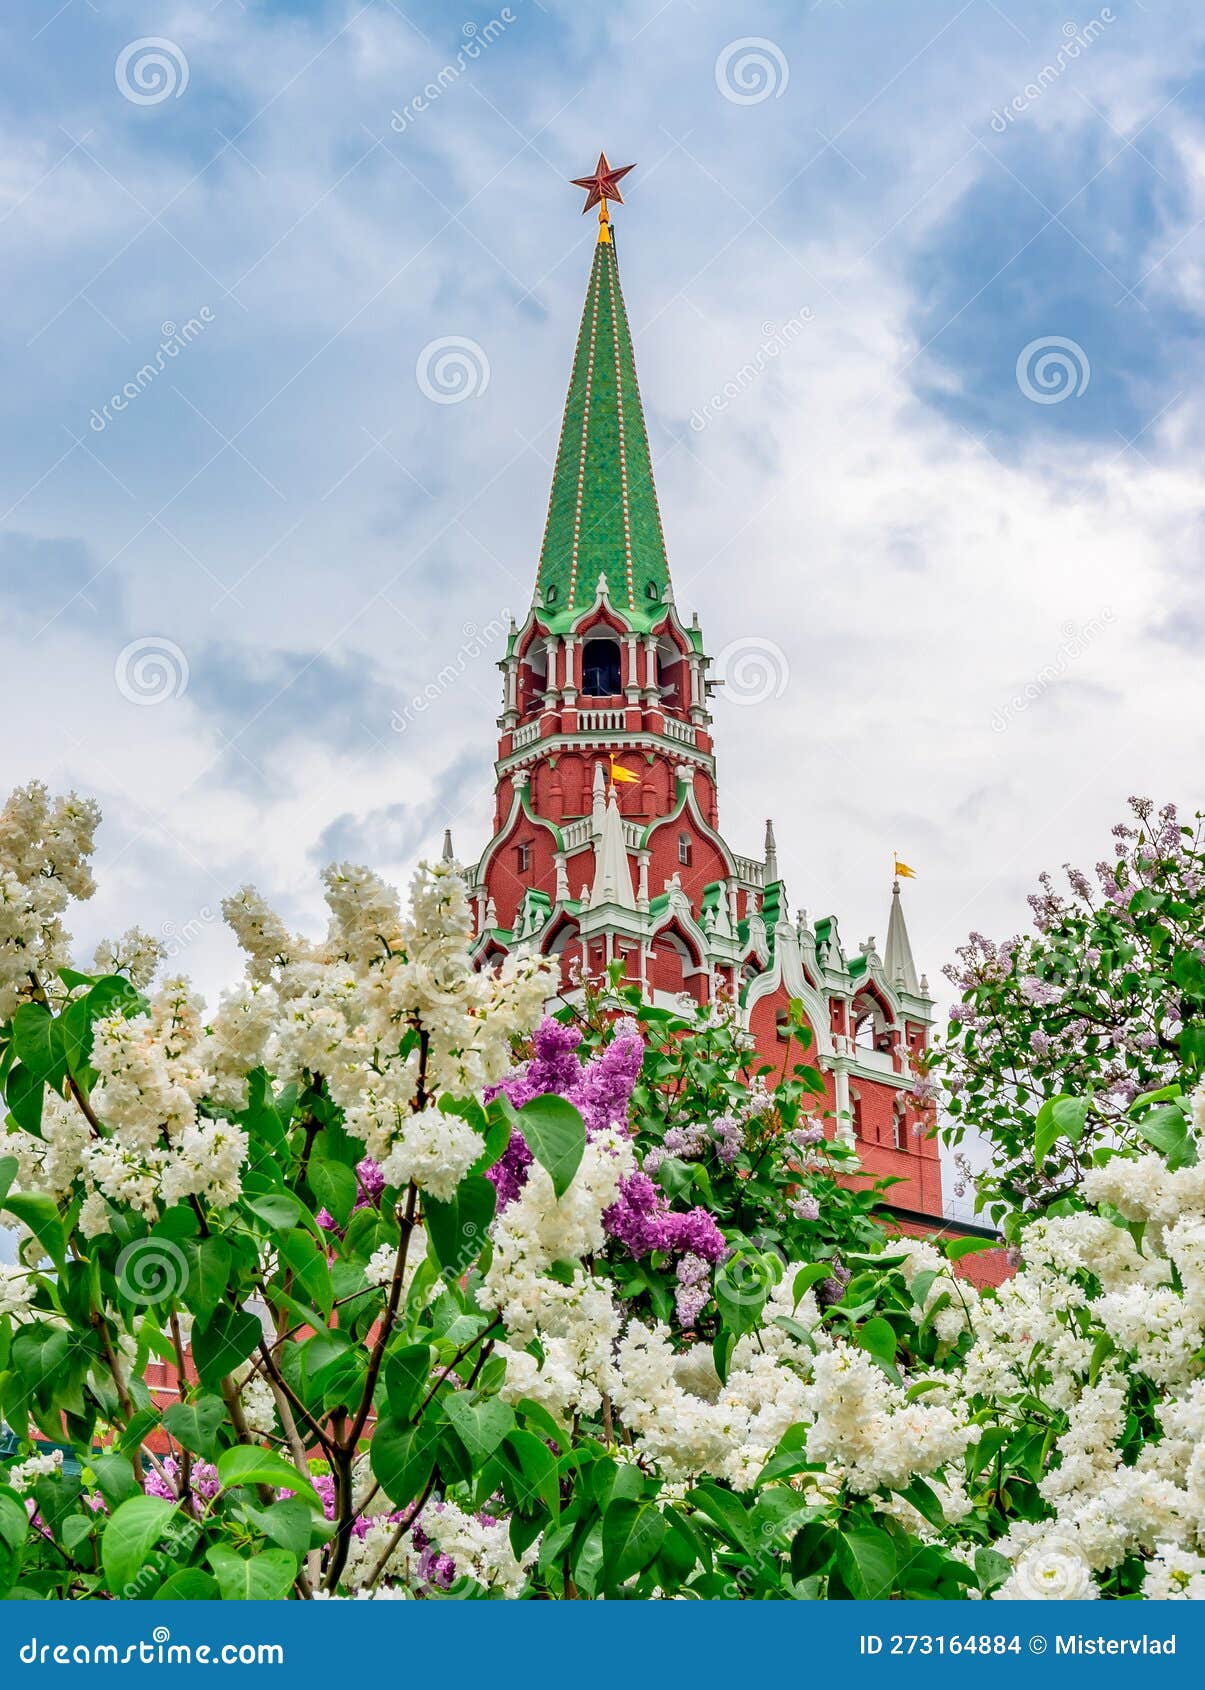 troitskaya tower of moscow kremlin in spring, russ